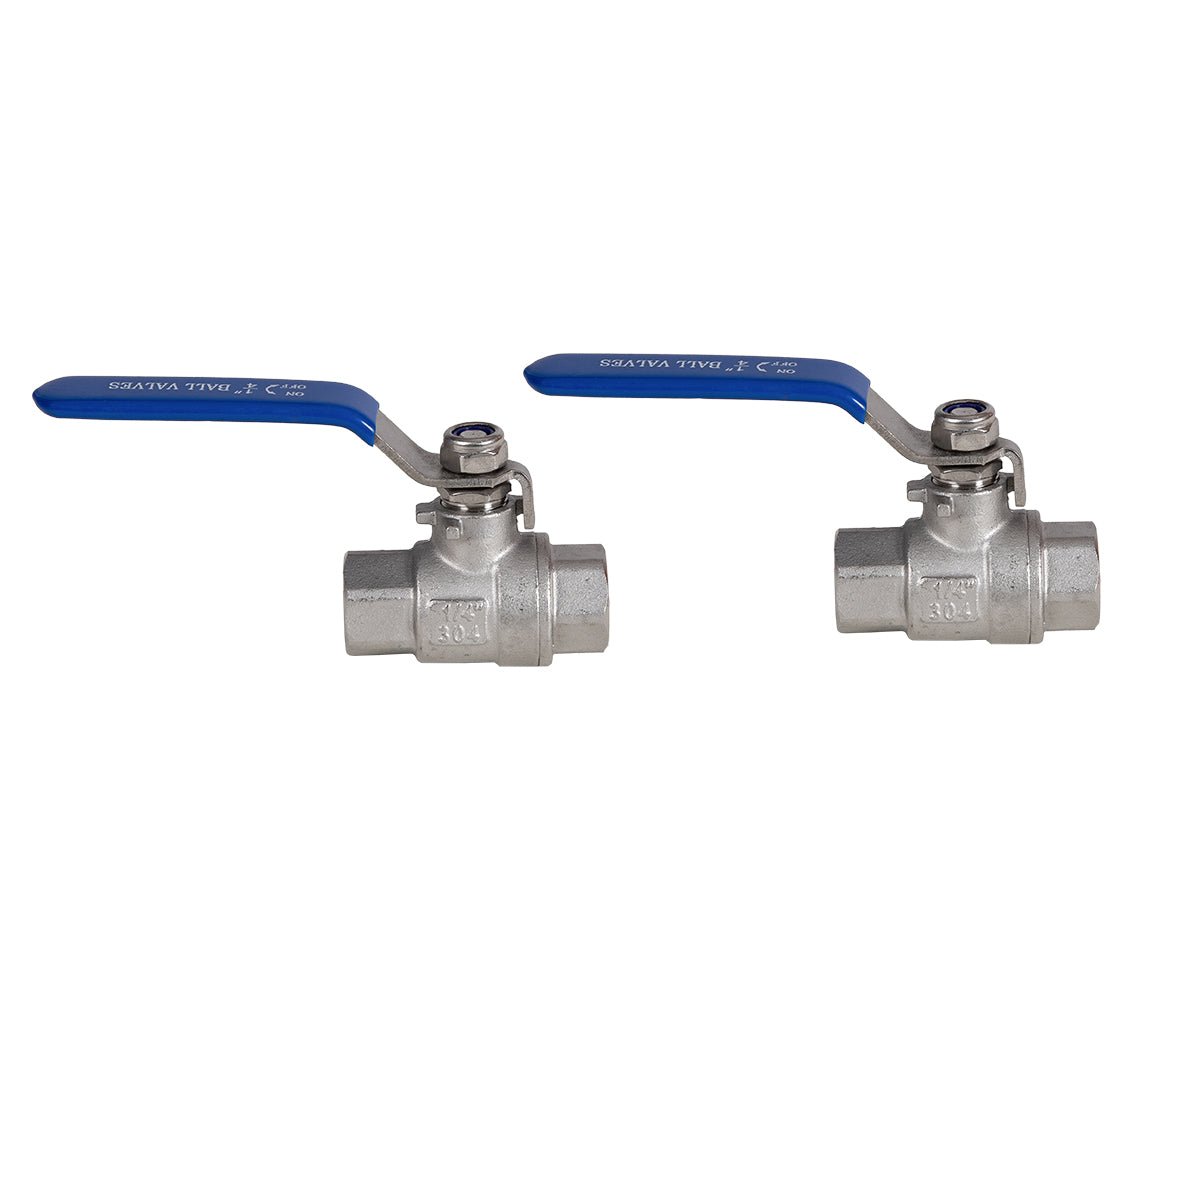 JIVTO 2 PC Stainless steel ball valve, NPT female to female, standard port valve - JIVTO